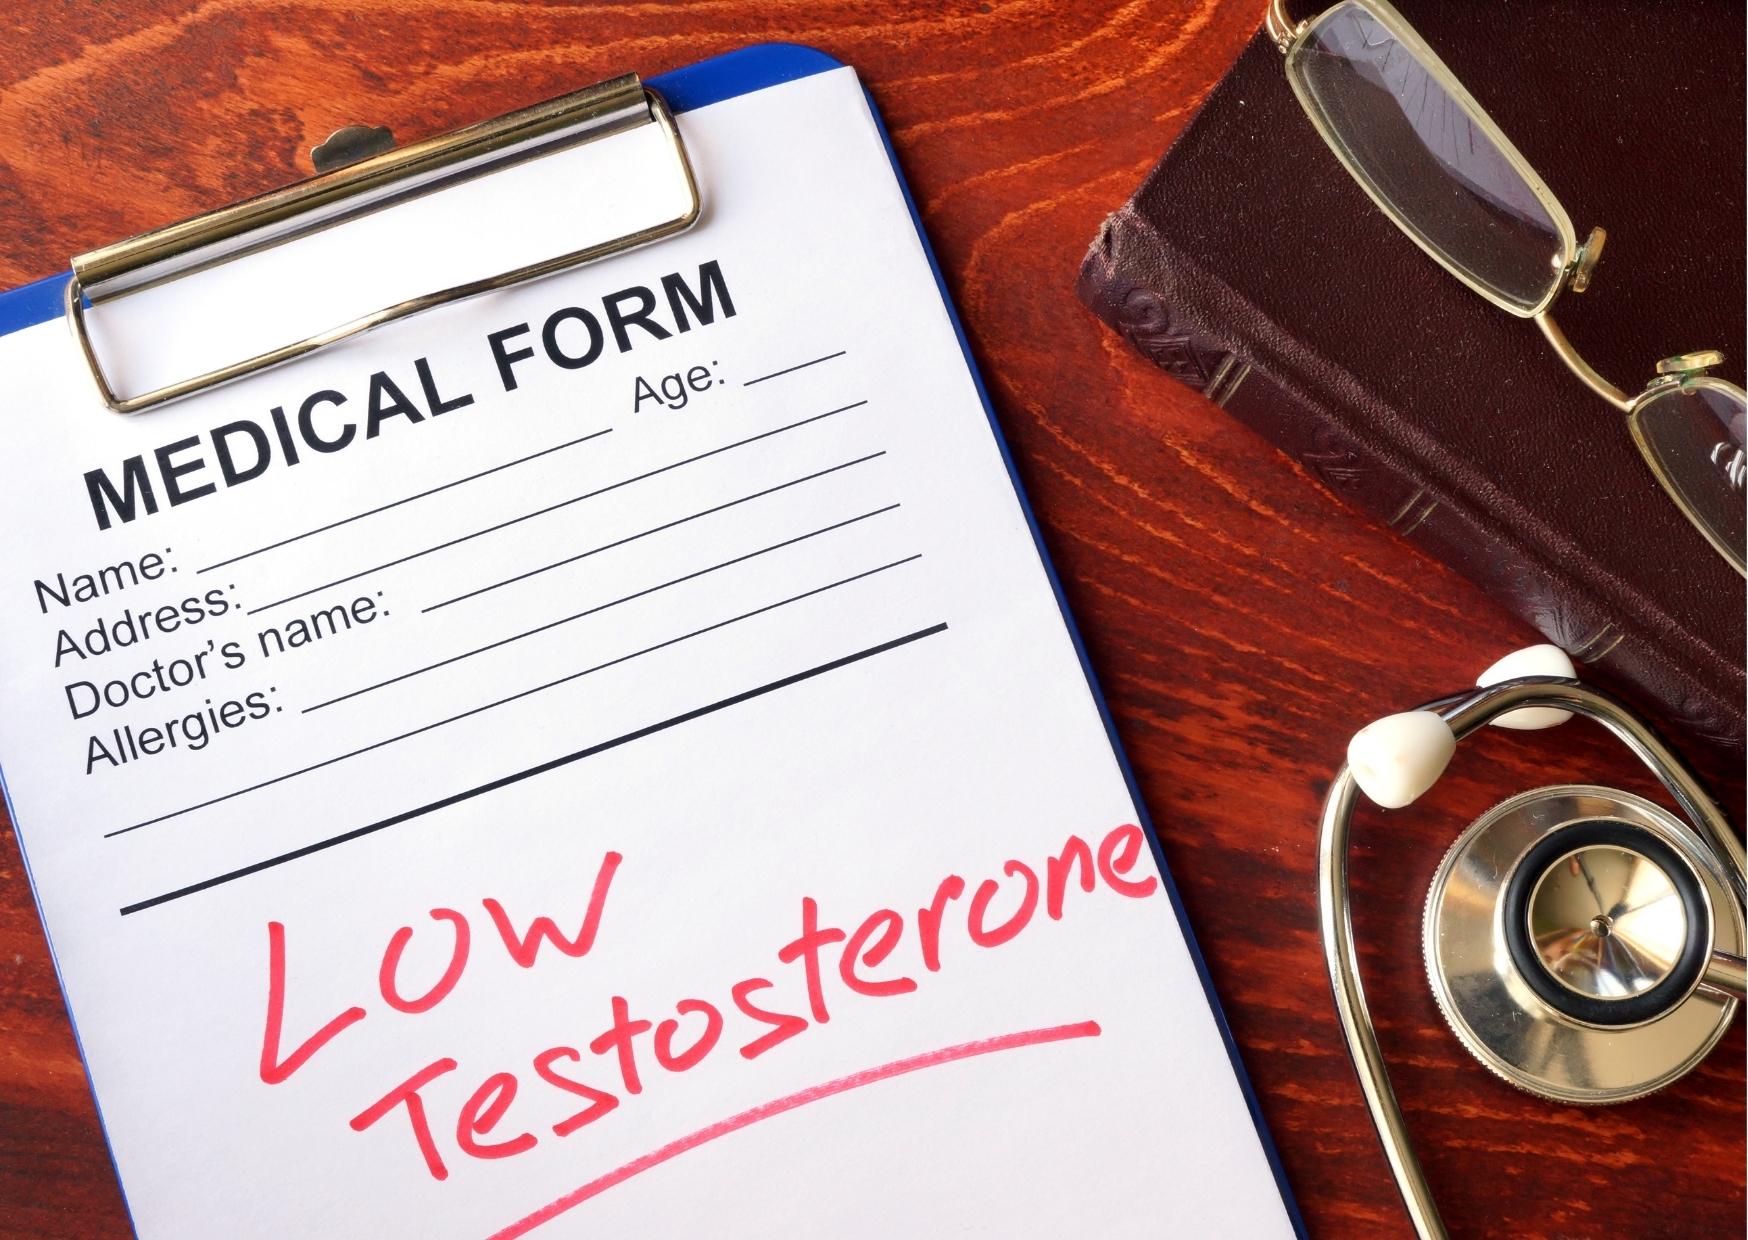 testosterona covid 19 hipogonadismo durateston